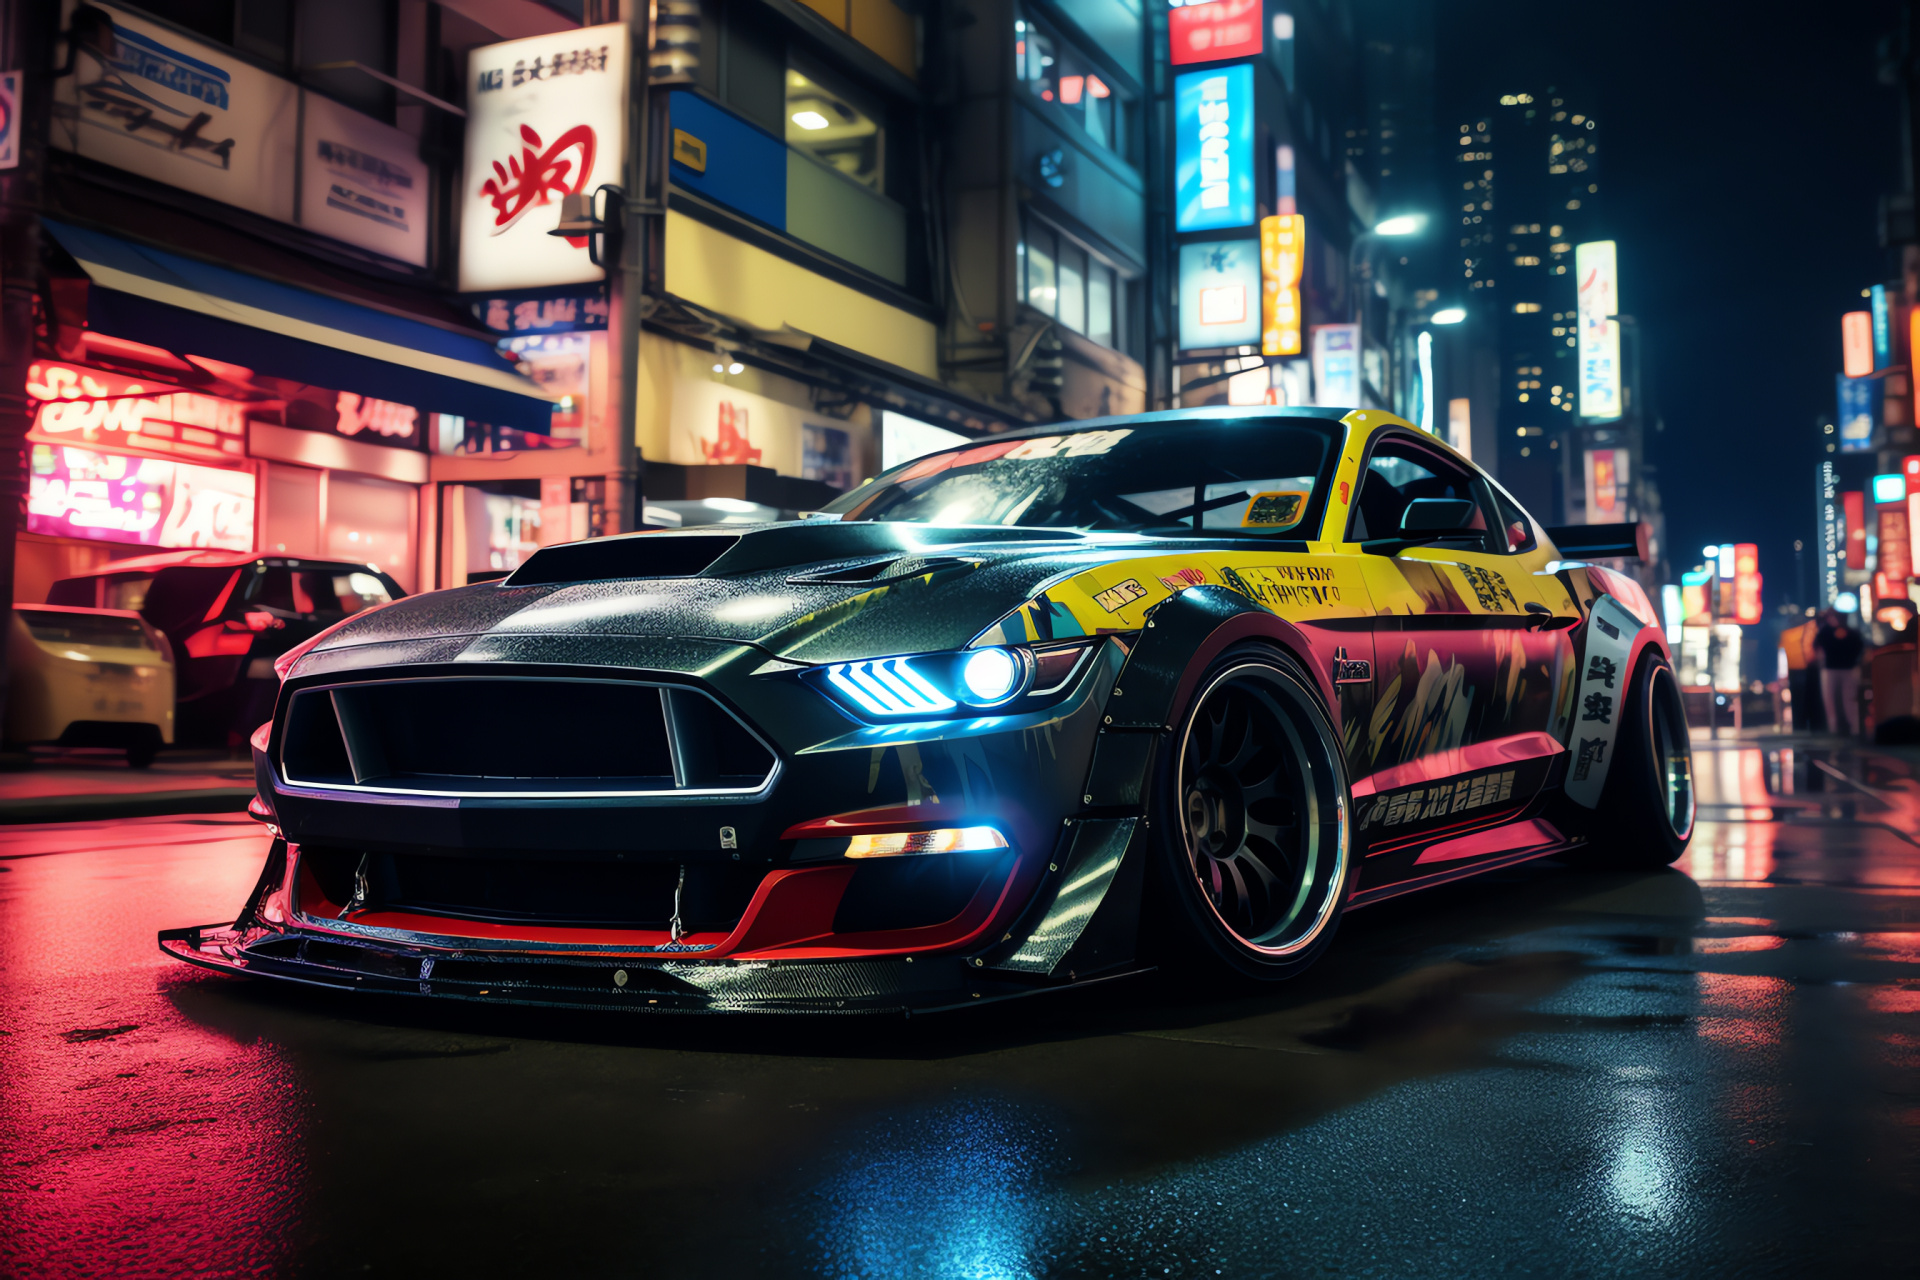 Mustang coupe, Tokyo nightscape, Racing style, Shibuya urban scene, Illuminated ambiance, HD Desktop Image